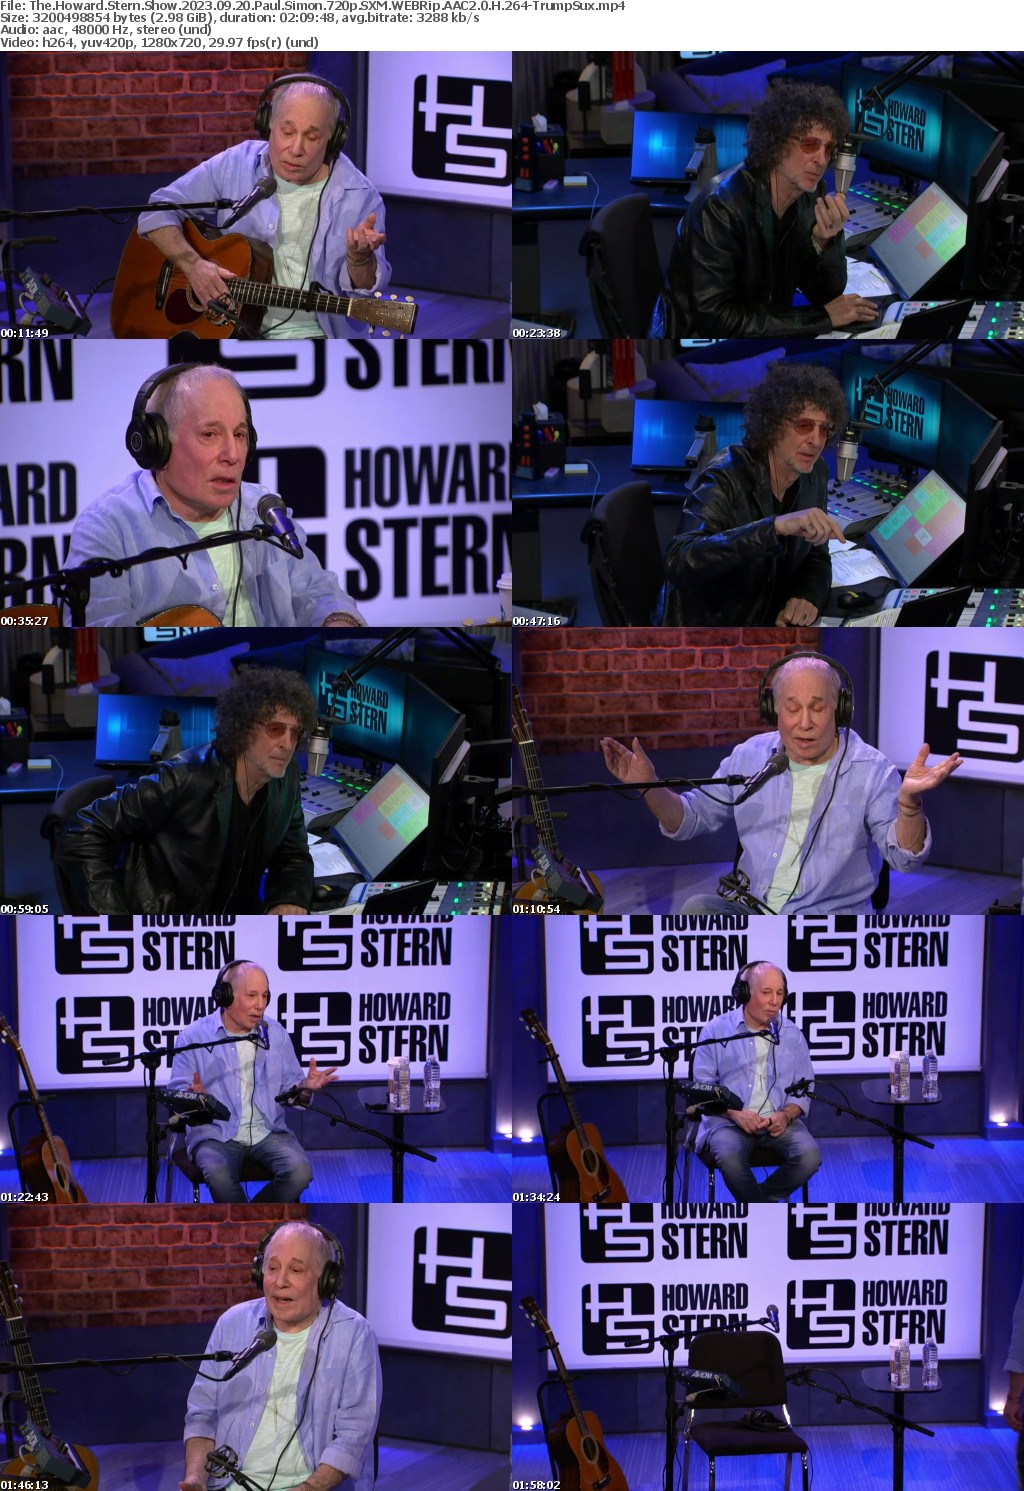 Howard Stern Show 2023 09 20 Paul Simon 720p Dbaum2